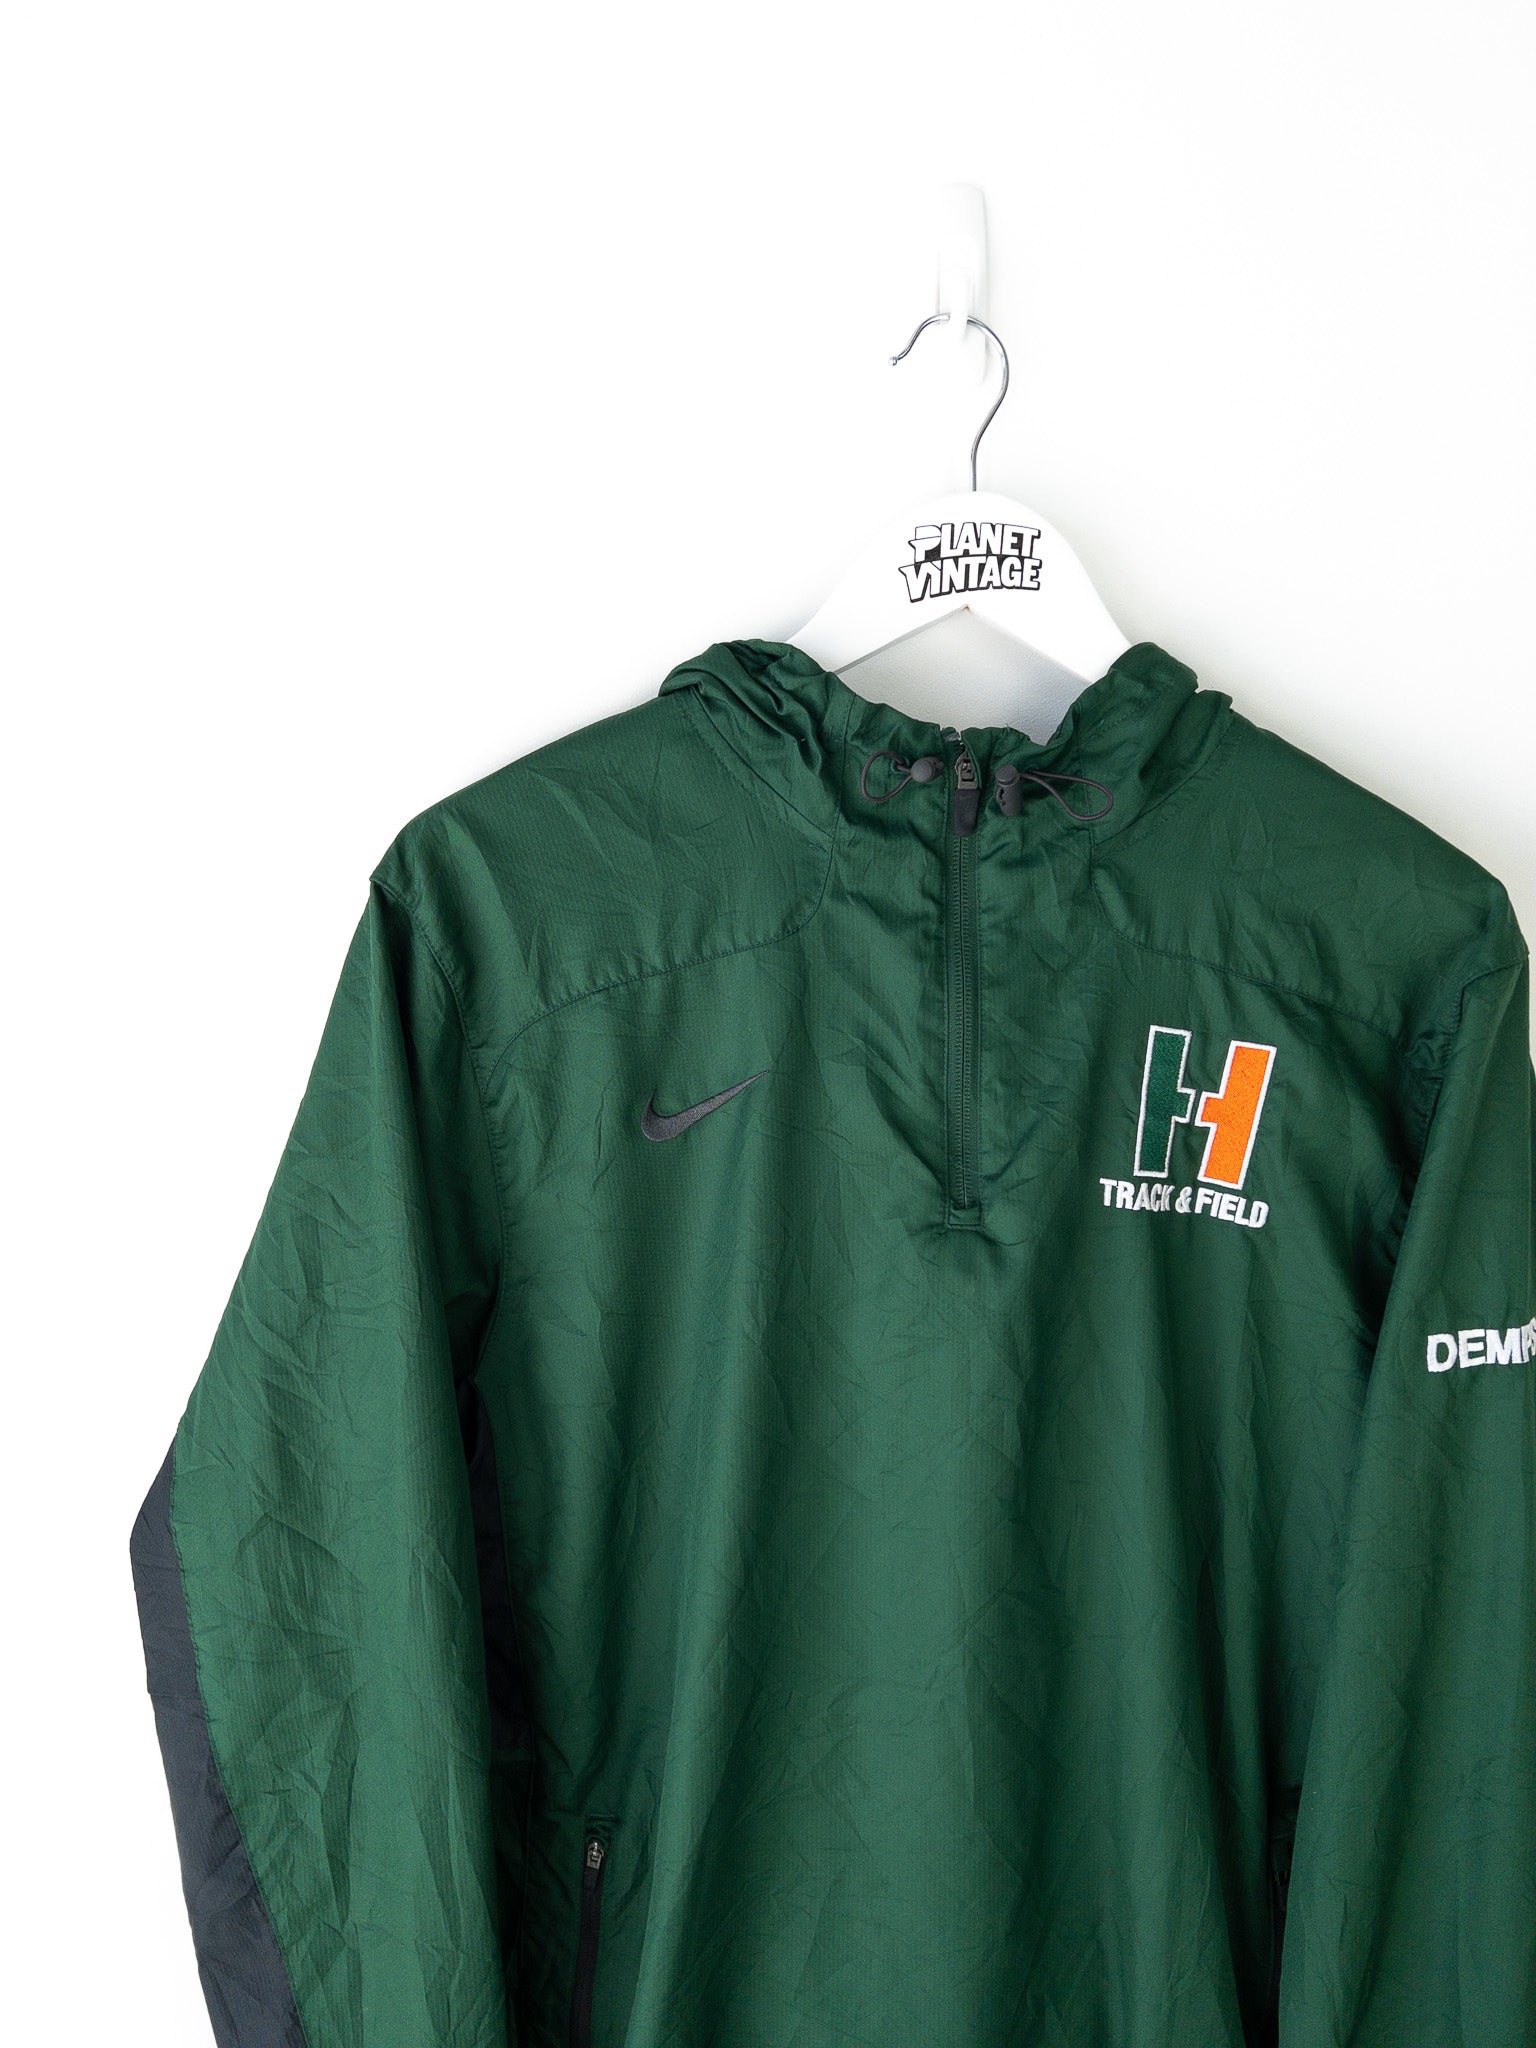 Vintage Miami Hurricanes Track & Field Nike Sweatshirt (L)